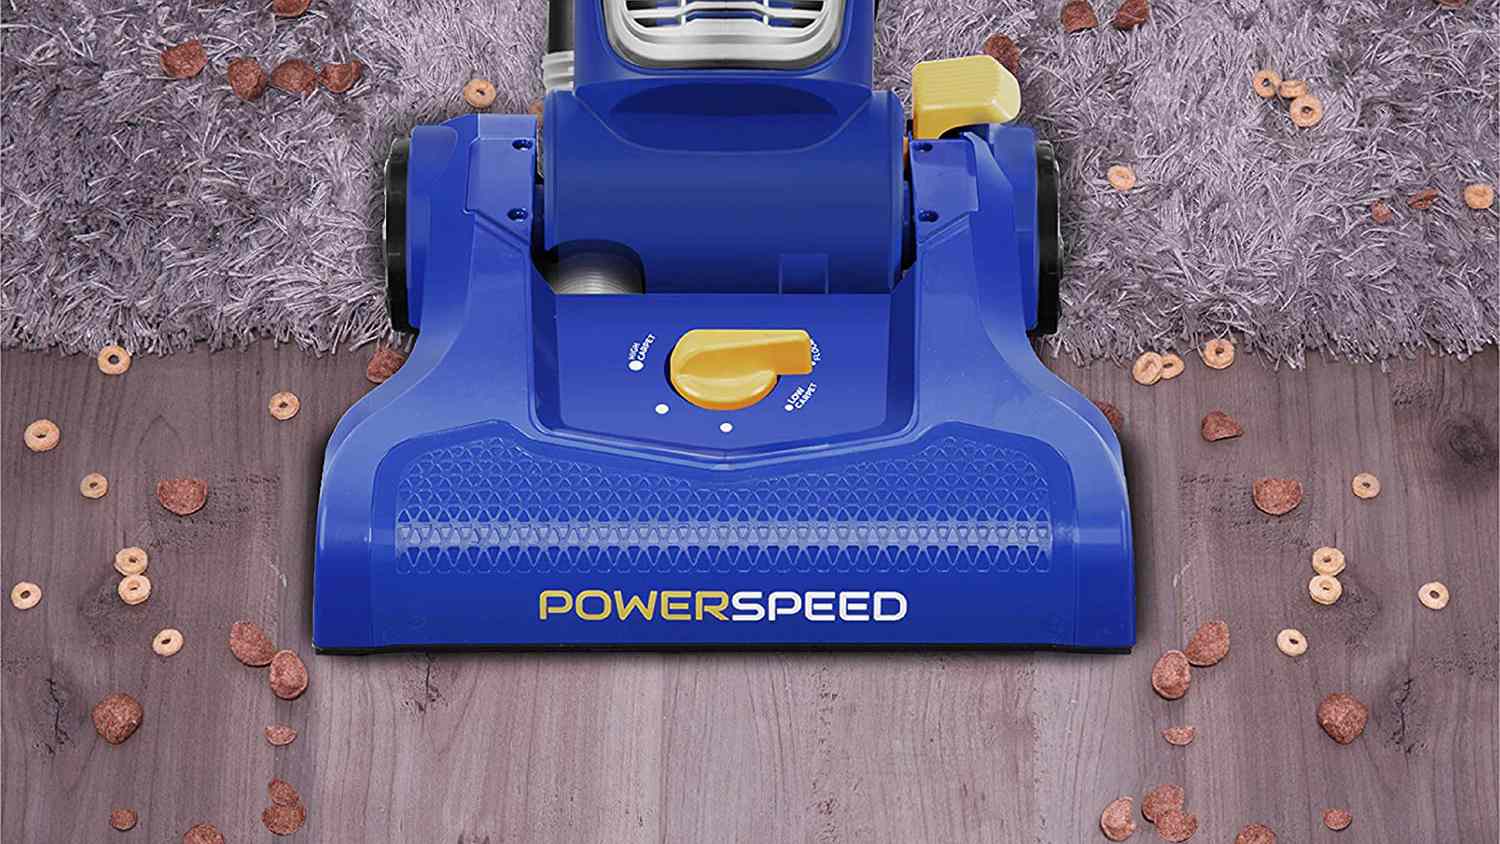 The Eureka PowerSpeed Vacuum Is on Sale at Amazon | Real Simple